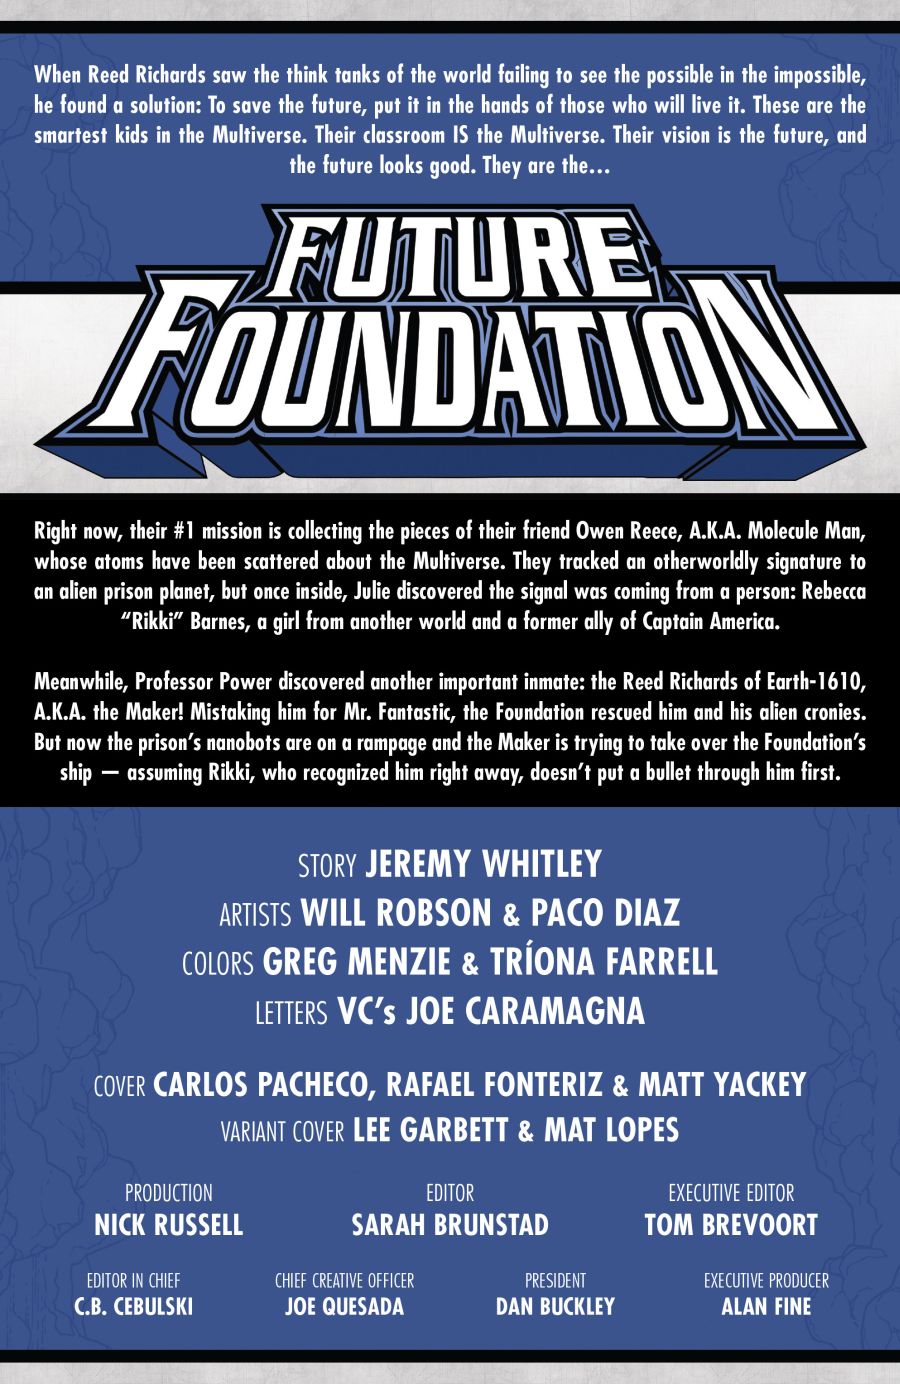 Future Foundation #3